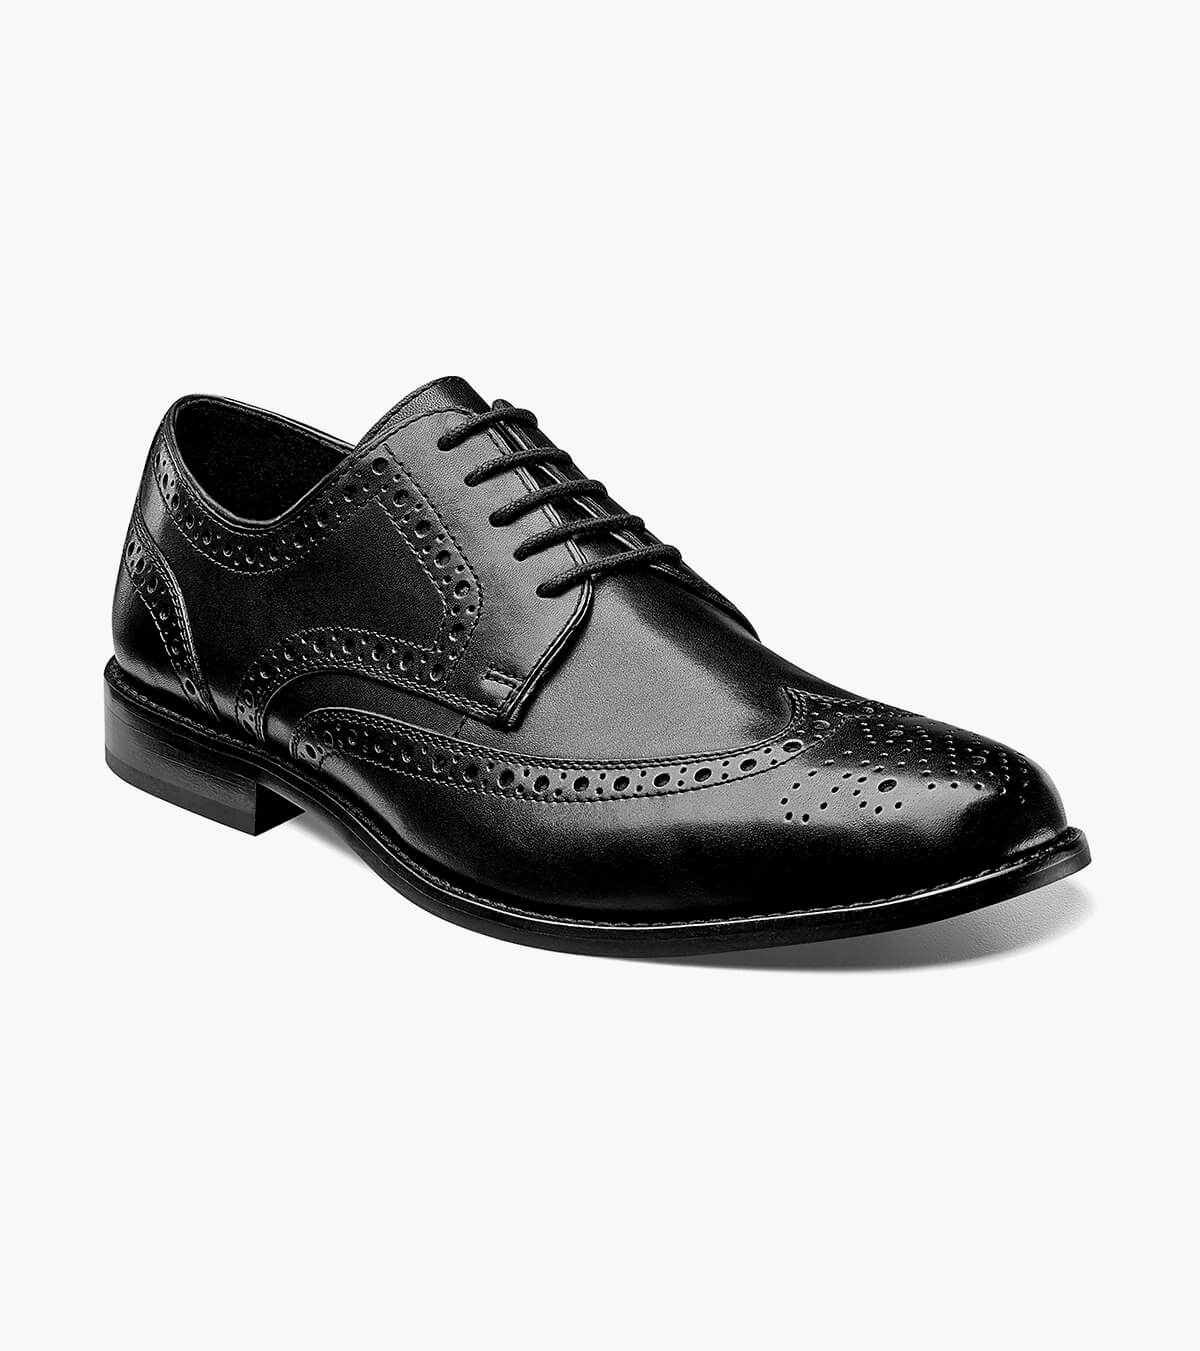 black oxford wingtip shoes